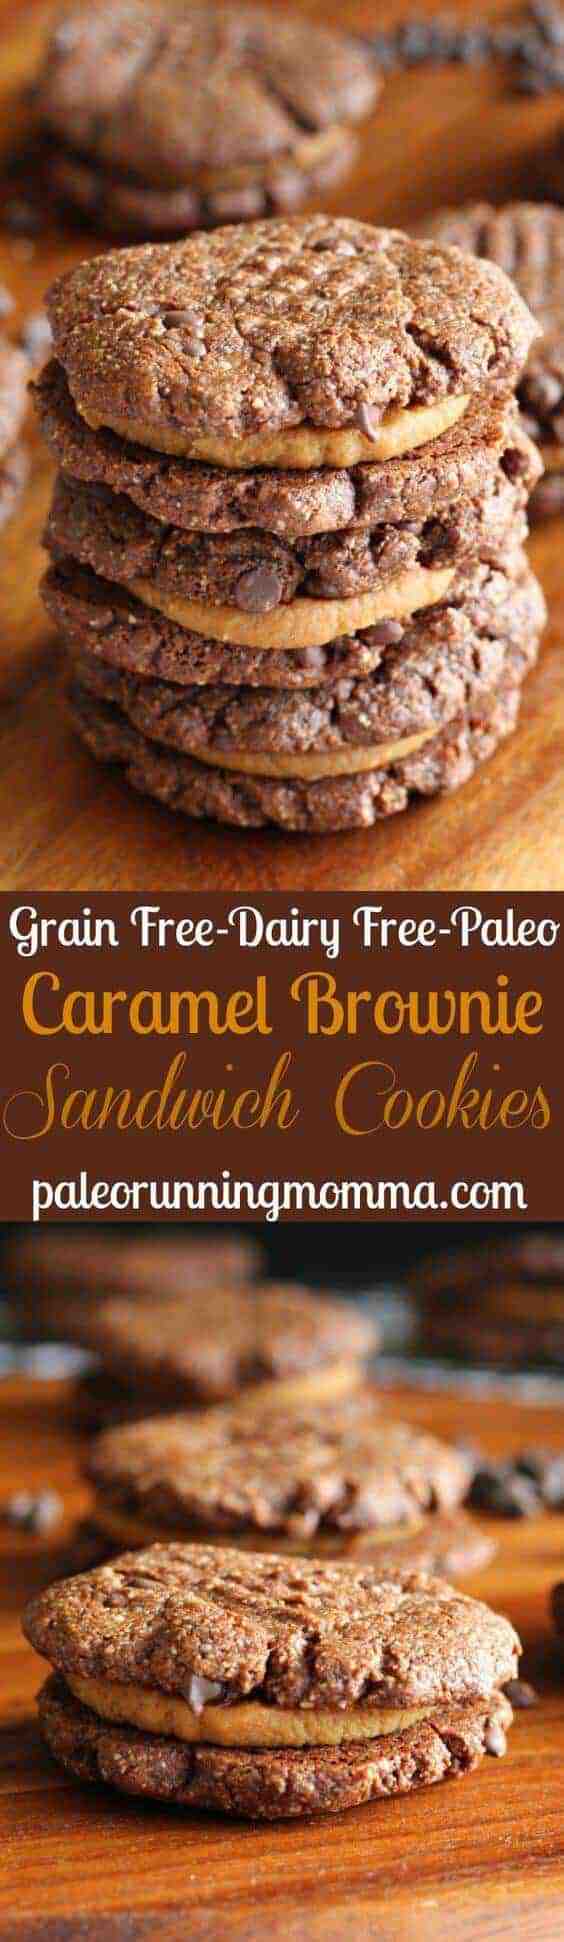 Paleo Caramel Brownie Sandwich Cookies